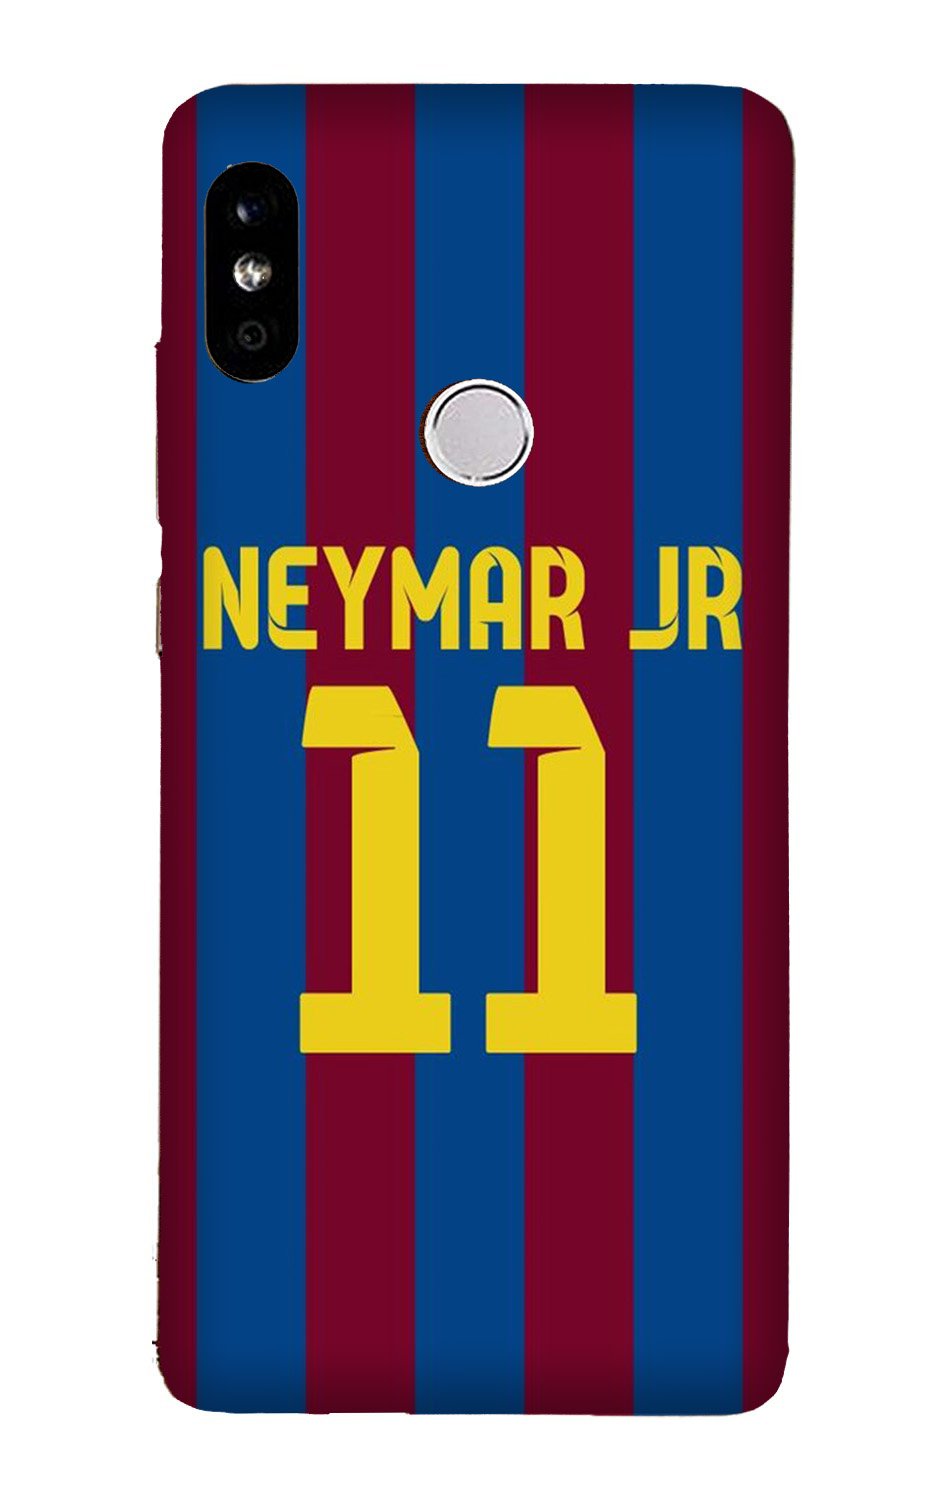 Neymar Jr Case for Xiaomi Redmi Y3  (Design - 162)